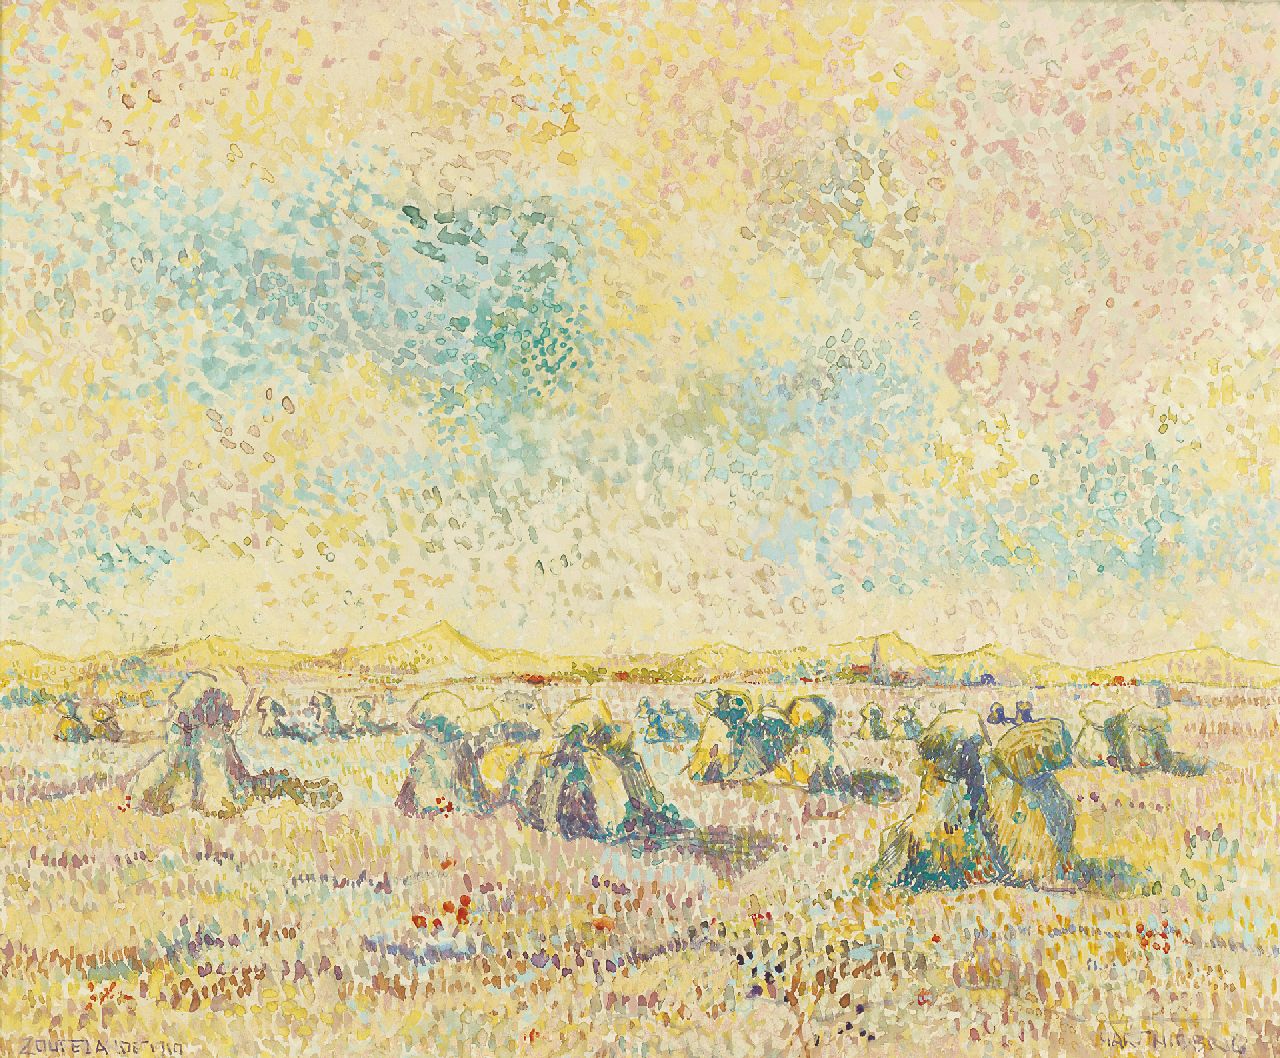 Hart Nibbrig F.  | Ferdinand Hart Nibbrig, Harvest time in the dunes of Zoutelande, Aquarell auf Papier 45,5 x 55,0 cm, signed l.r. und dated 'Zoutelande 1910'